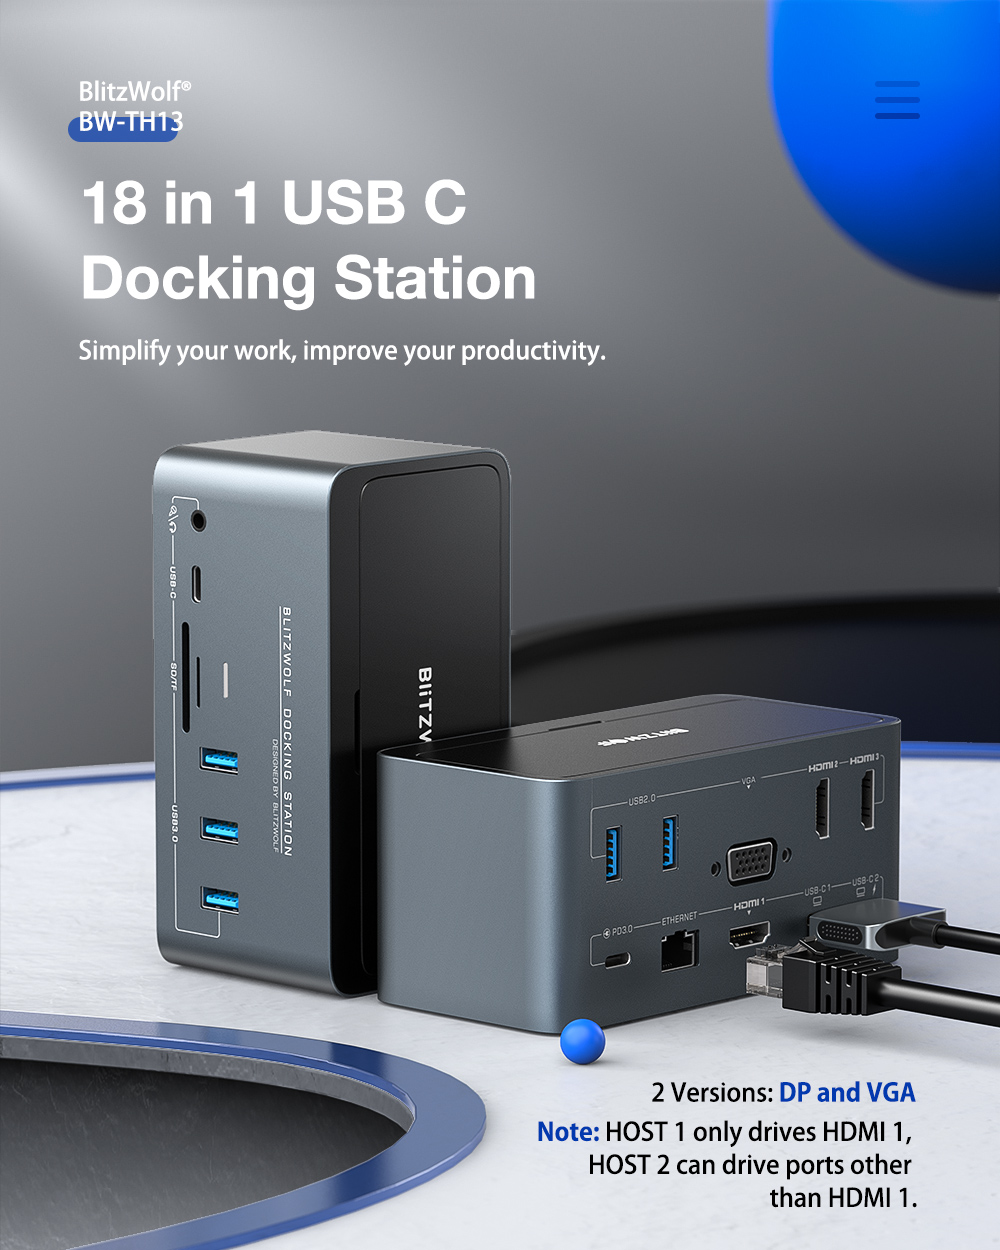 Blitzwolf BW-TH13 docking station, USB HUB